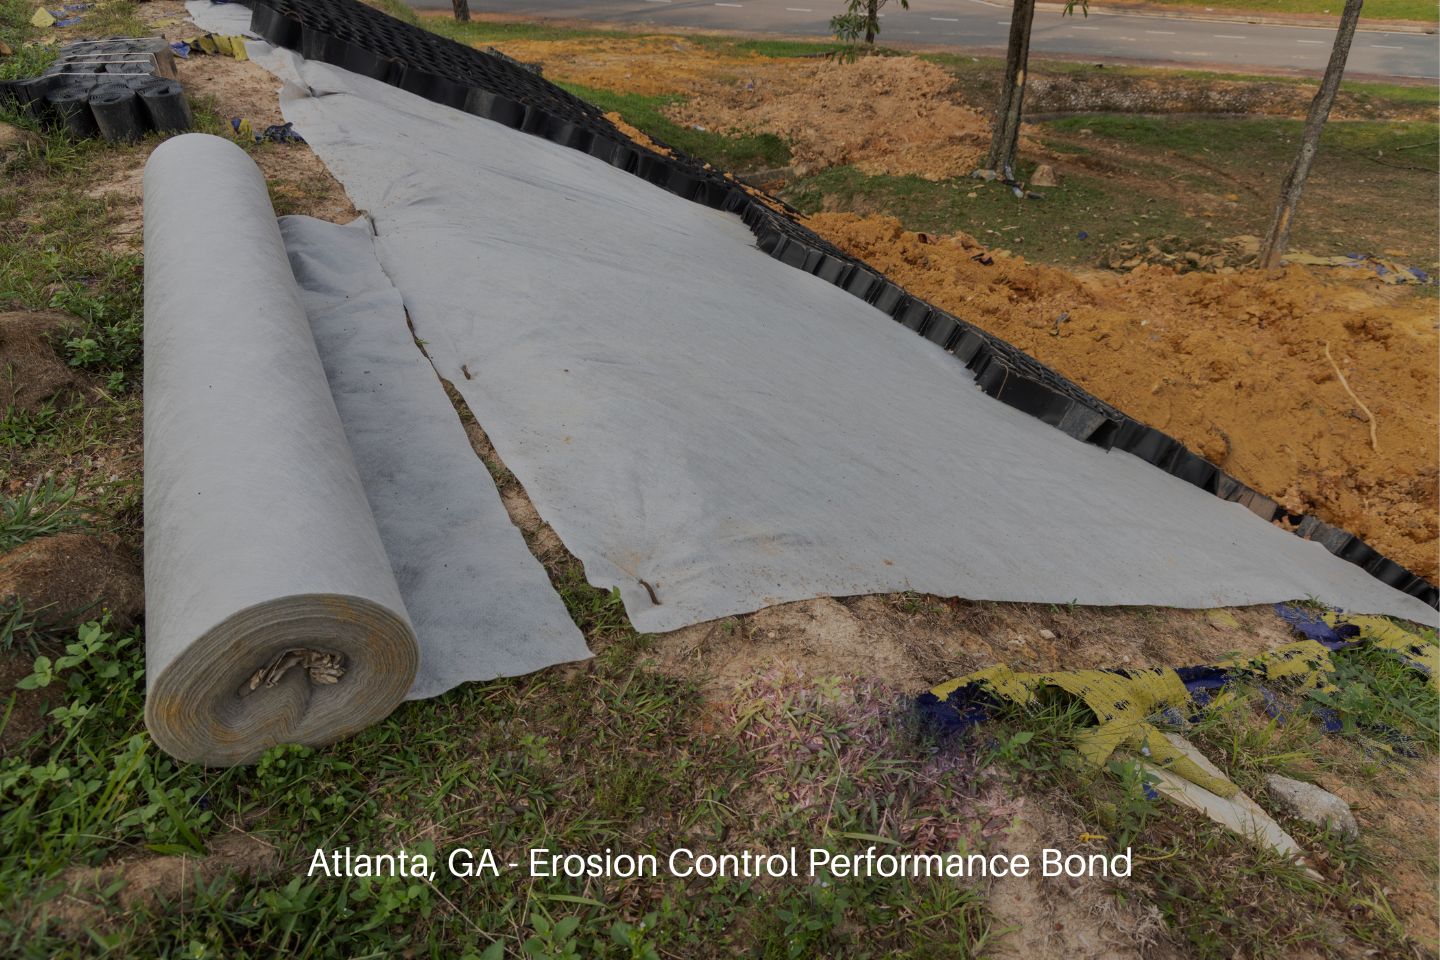 Atlanta, GA - Erosion Control Performance Bond - Slope erosion control grids, sheets and earth on steep lope.